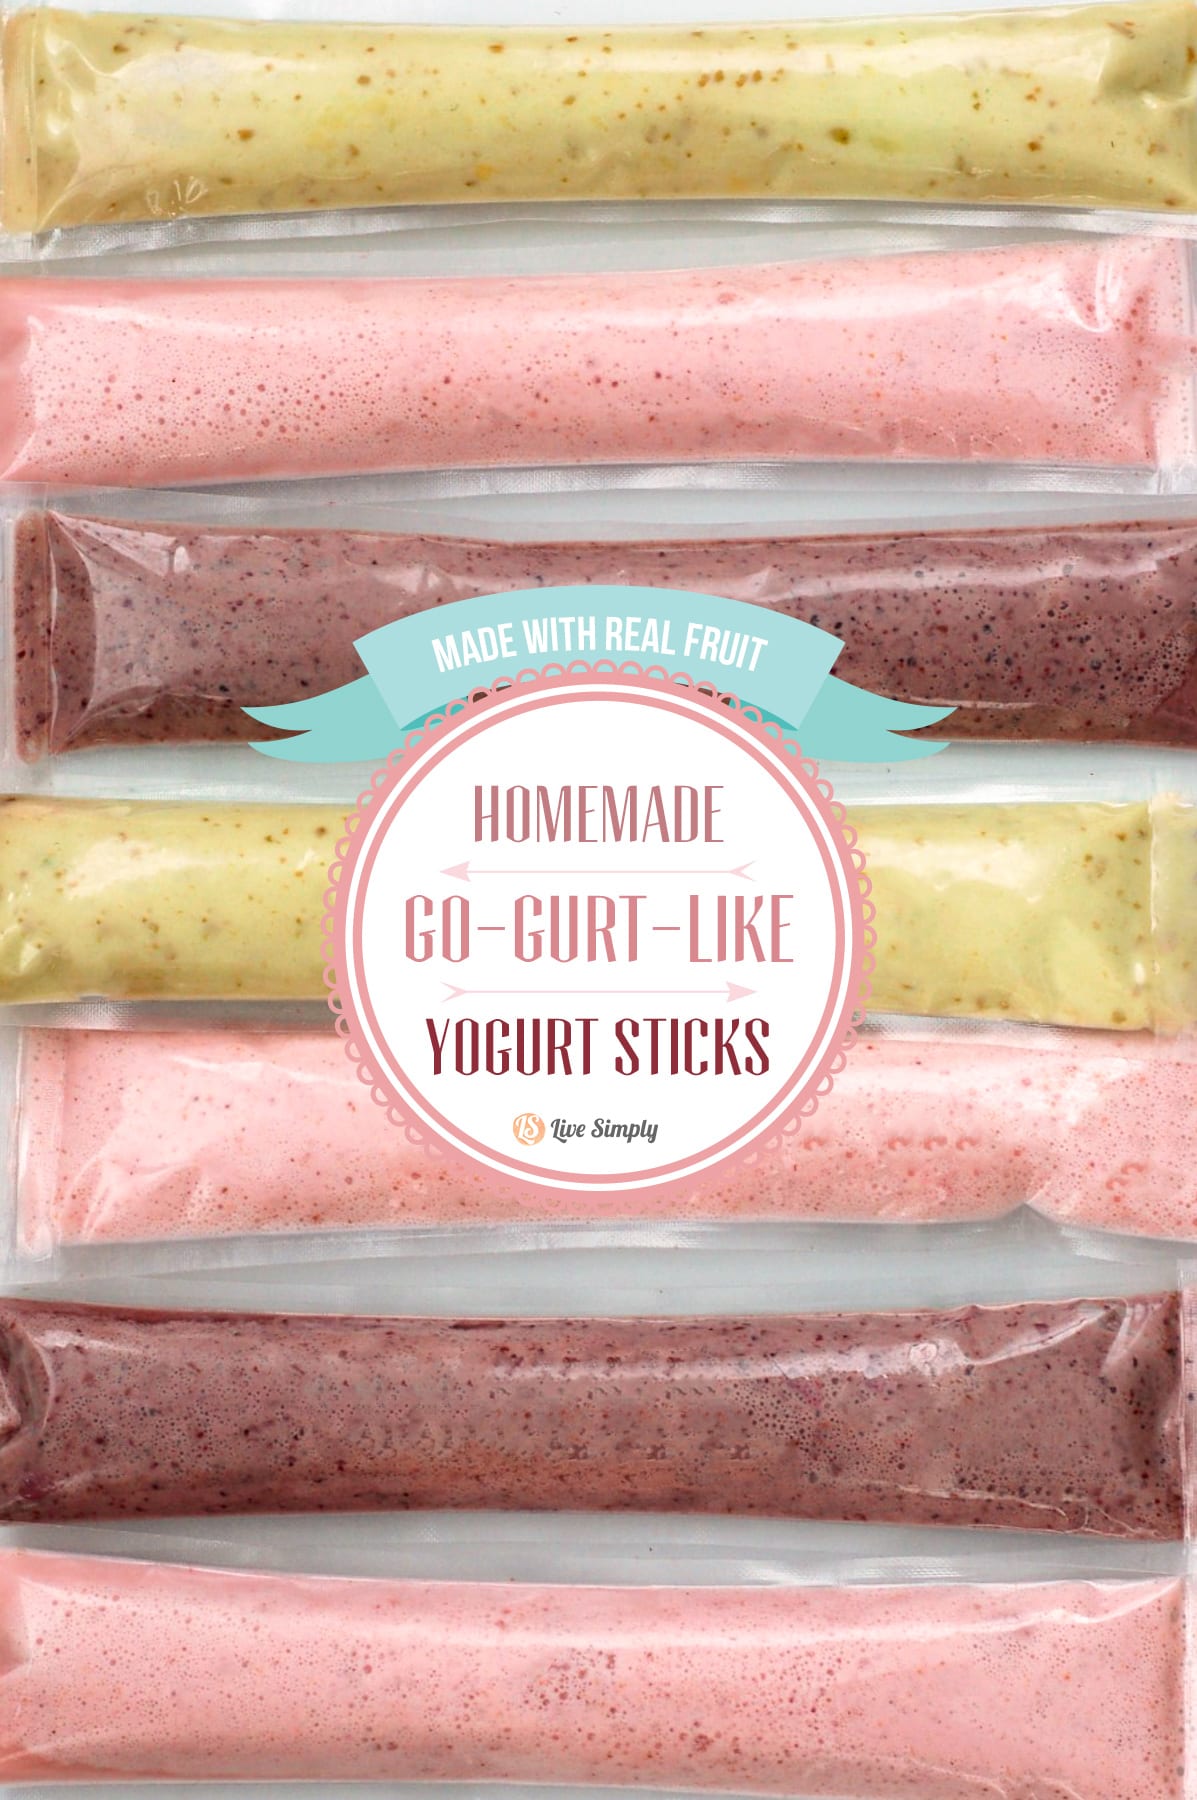 Homemade Go-Gurt-Like Yogurt Sticks